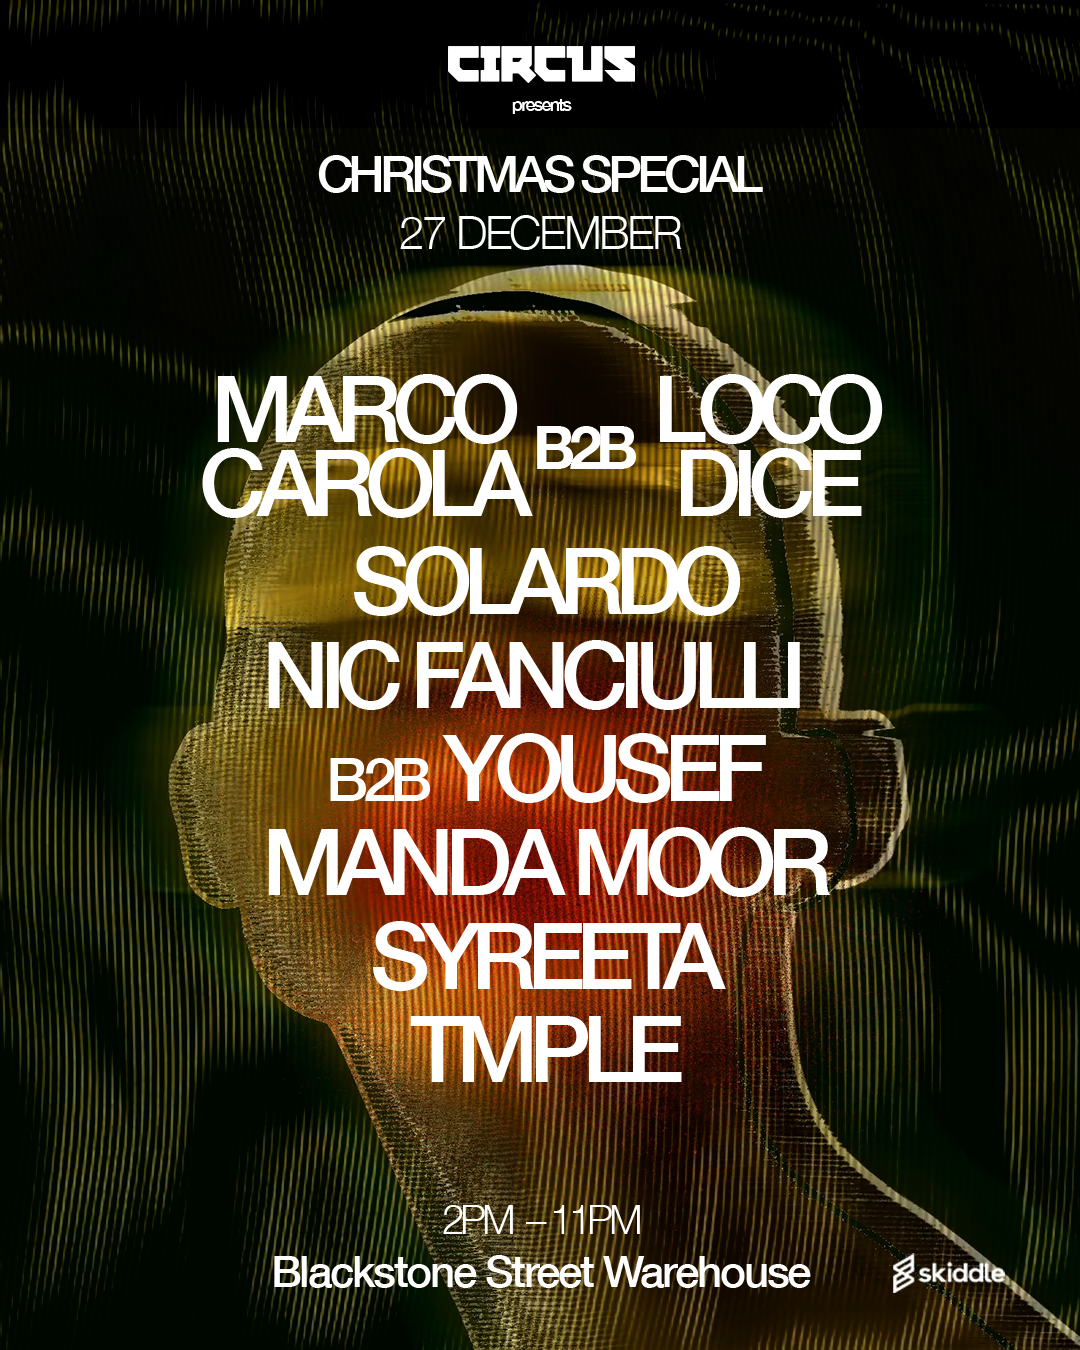 Circus Christmas Special - Marco Carola, Loco Dice, Solardo, Nic Fanciulli & More Liverpool - フライヤー表